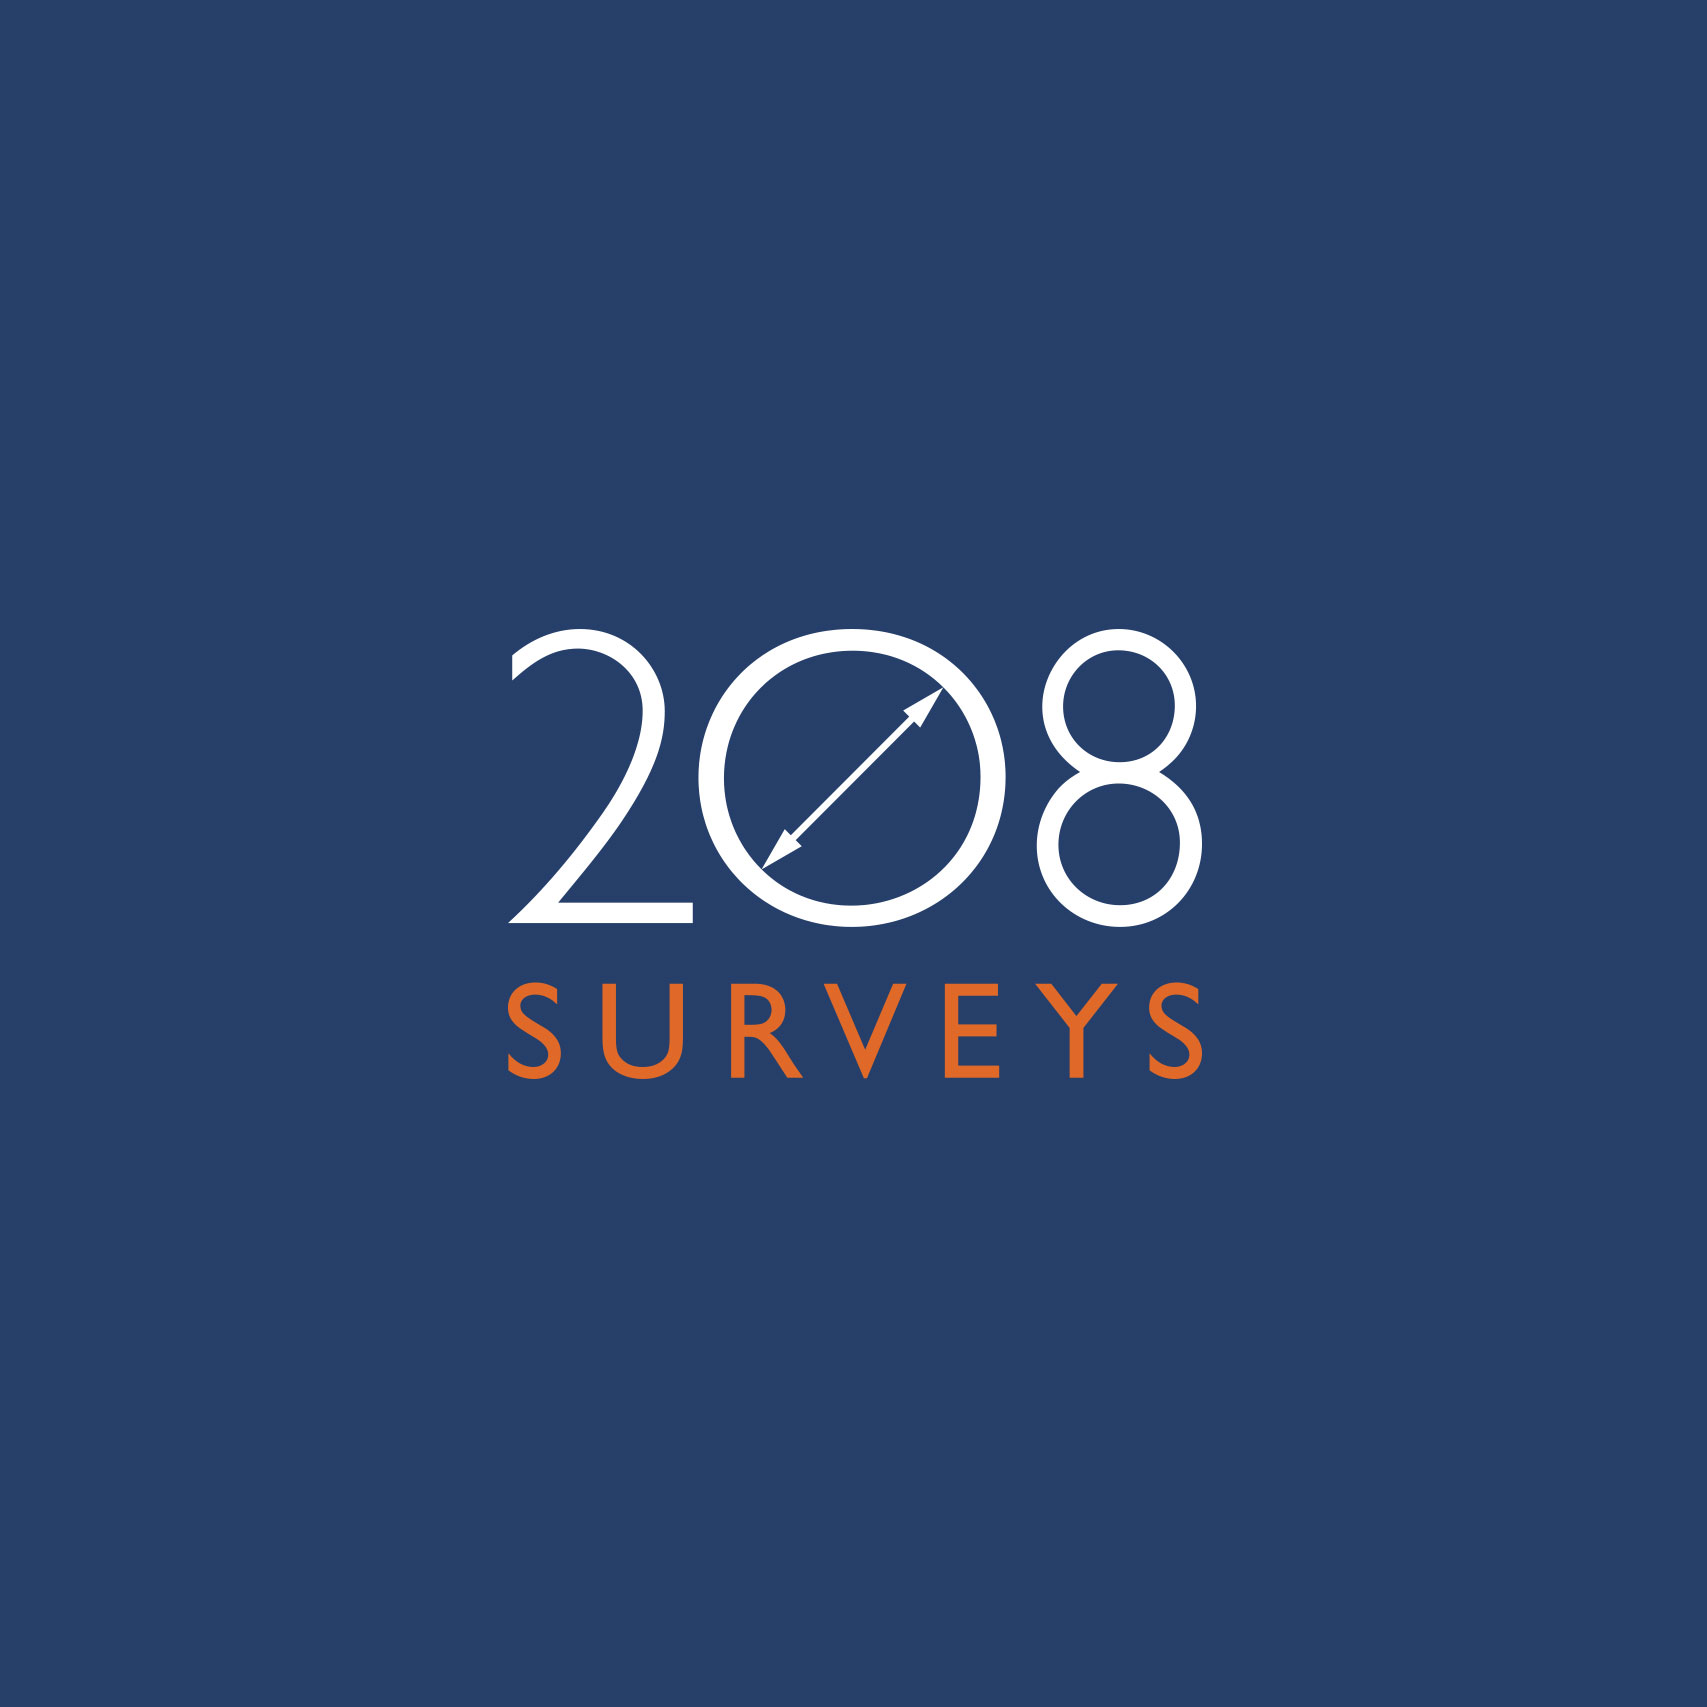 Simple and modern logo design for 208 Surveys London.